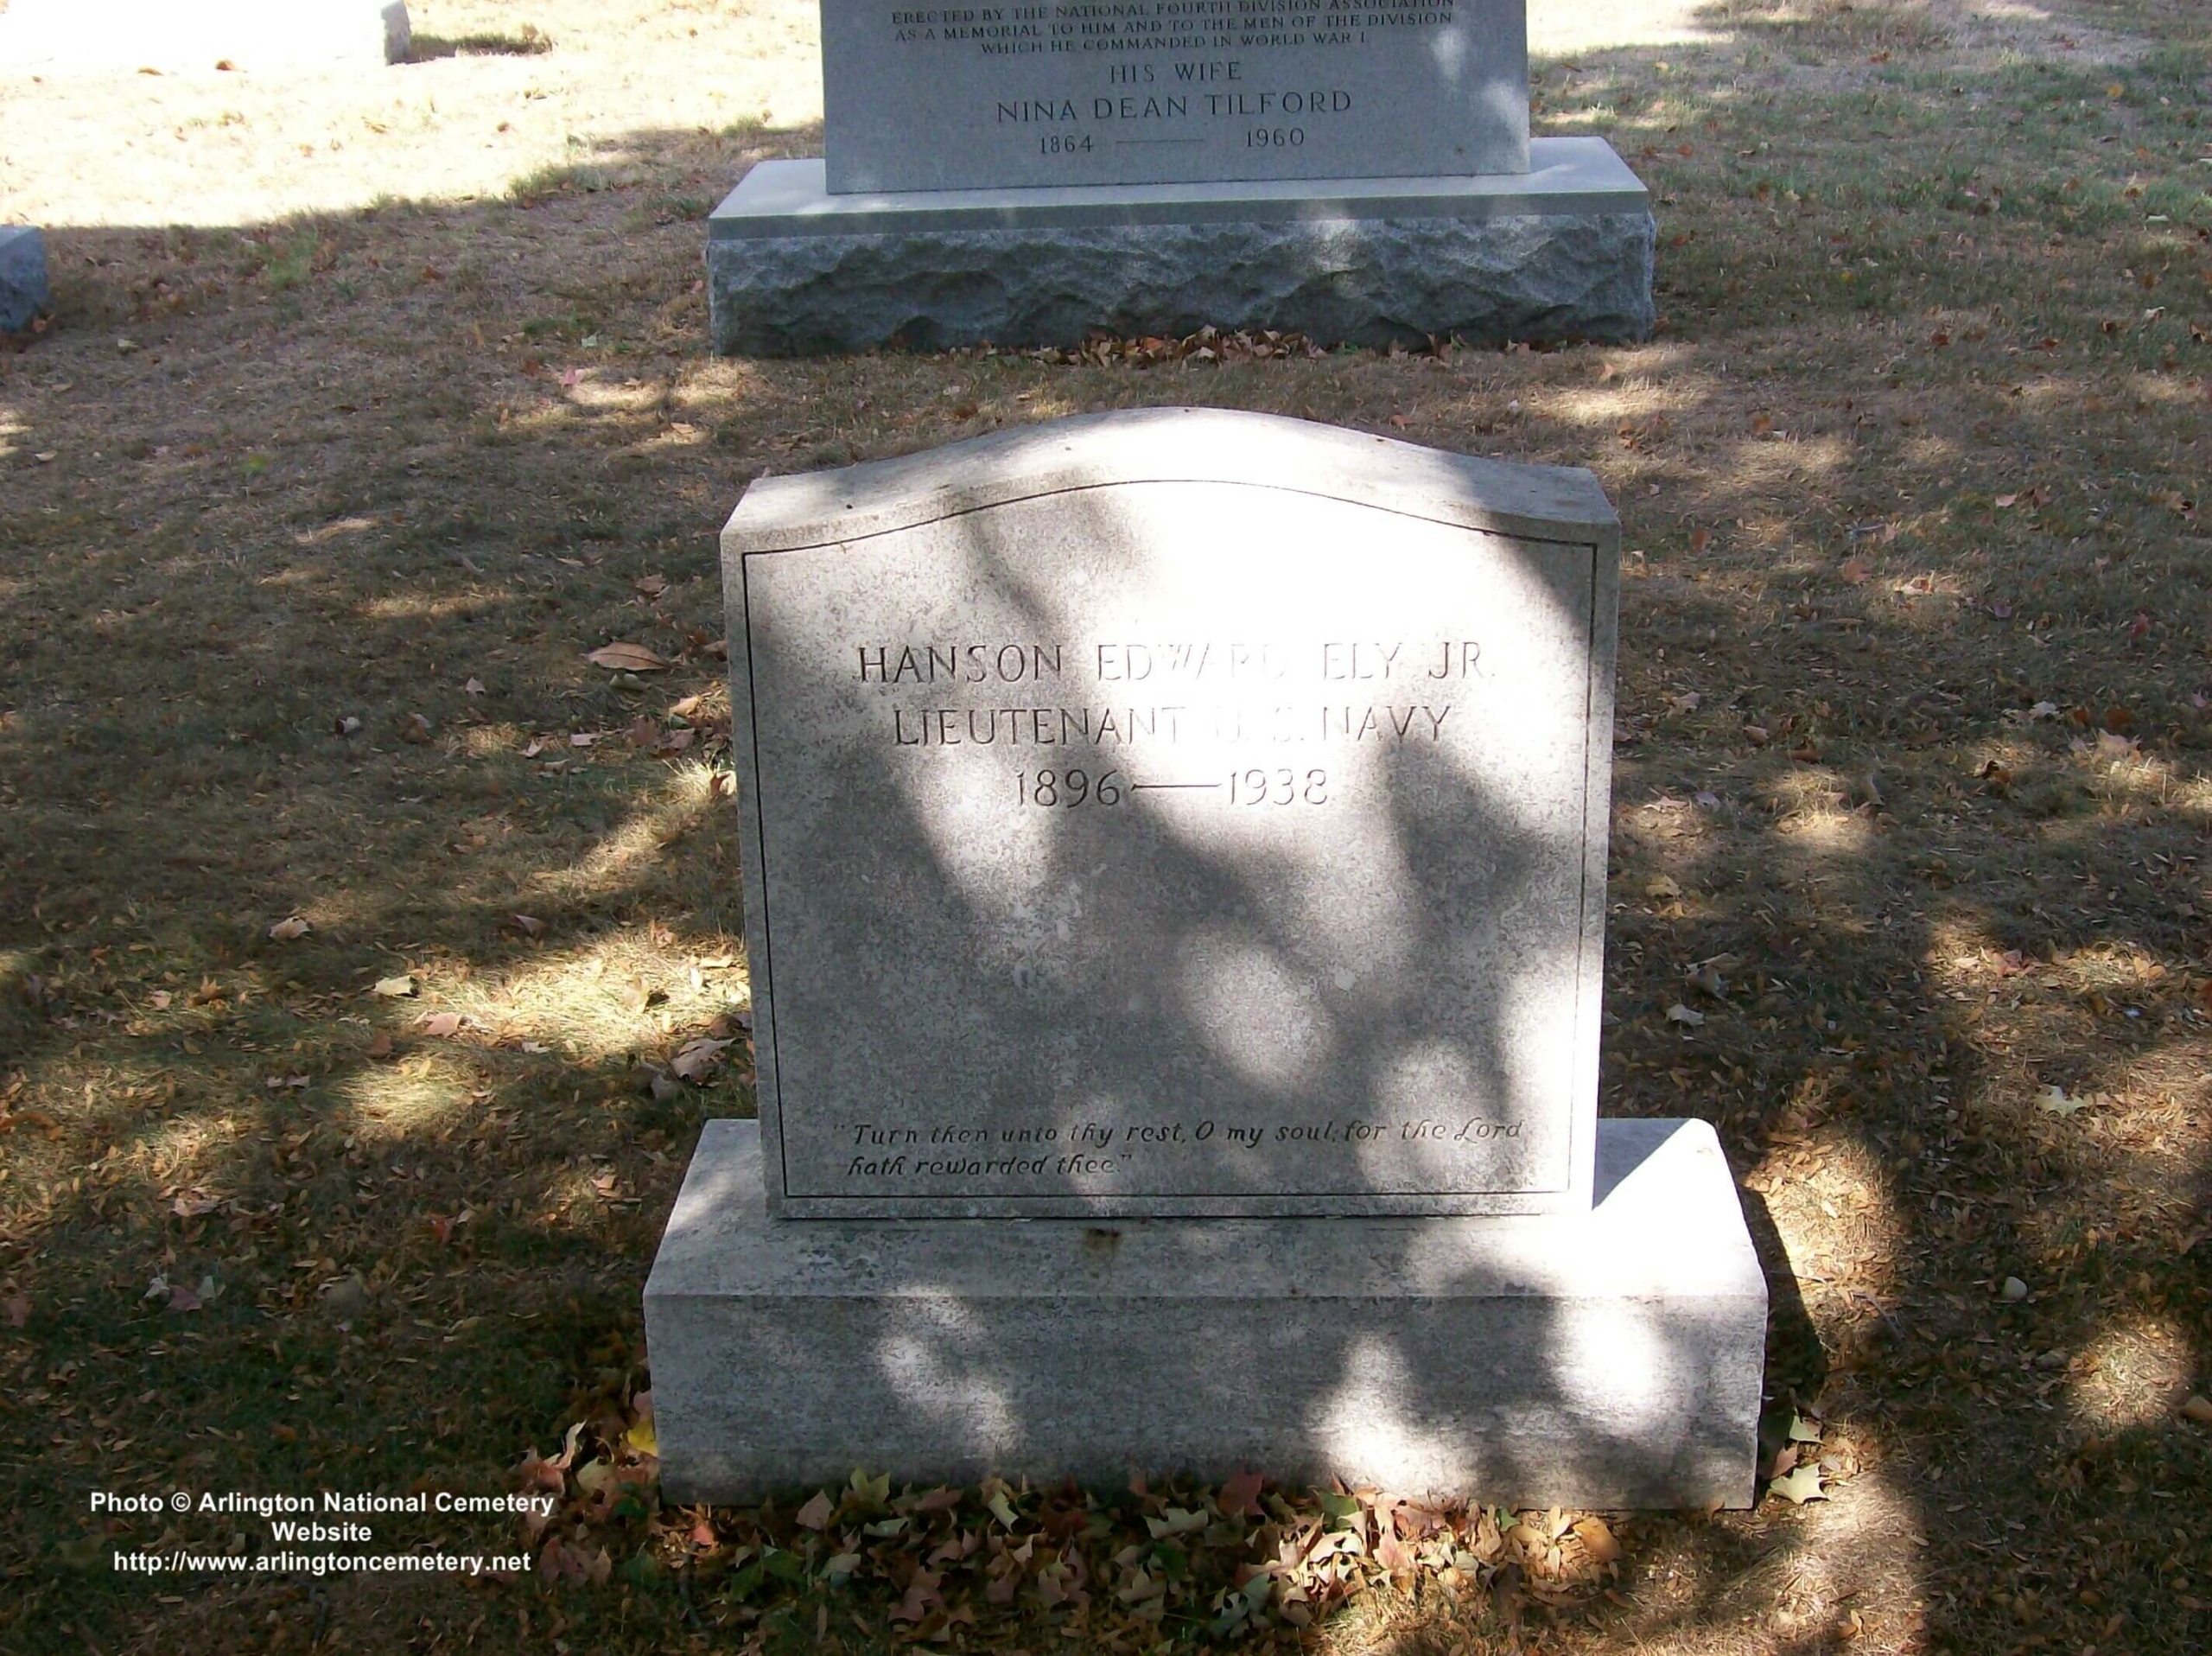 heelyjr-gravesite-photo-october-2007-001